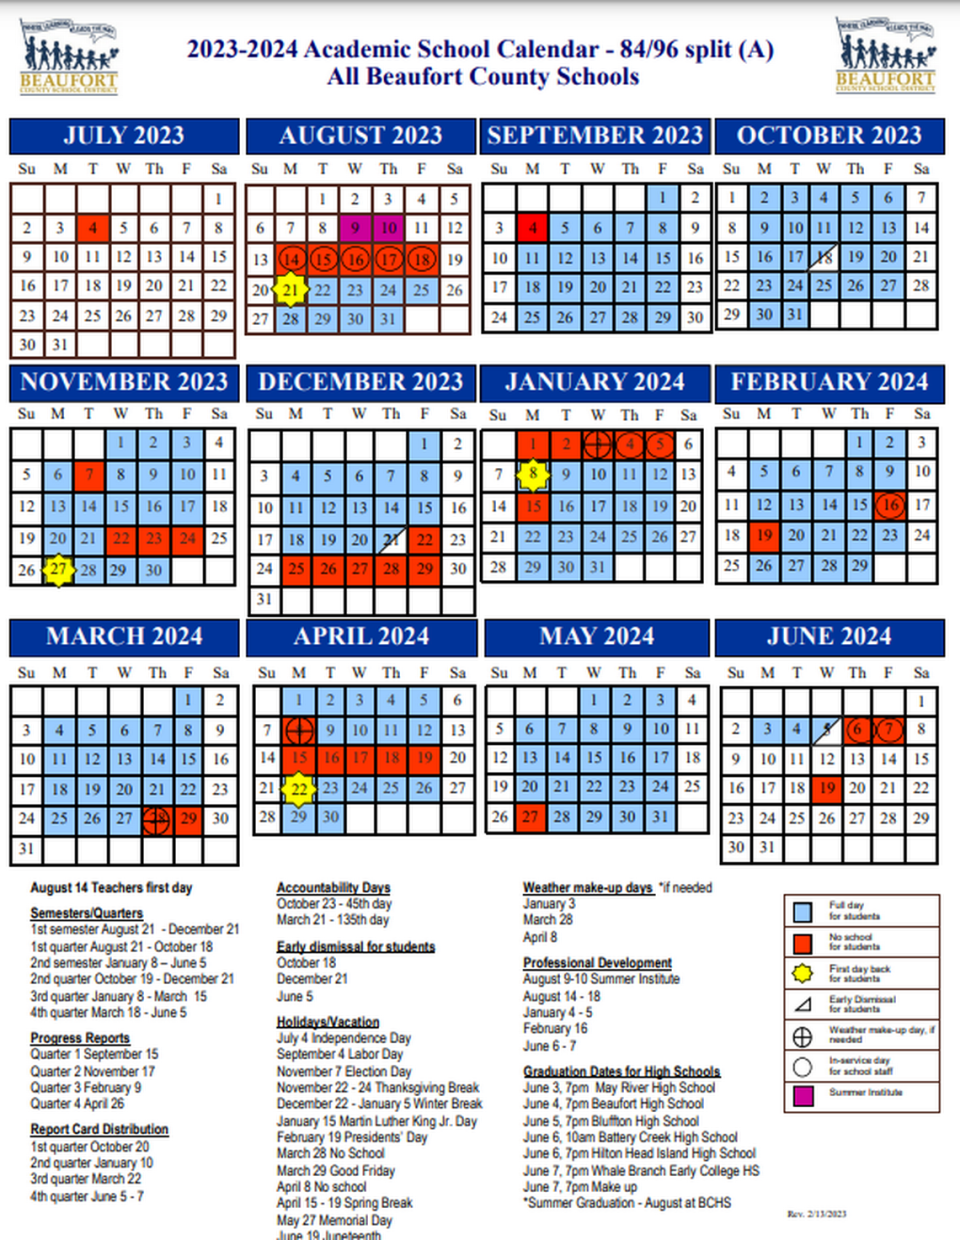 Beaufort County 2023-2024 school calendar in English.